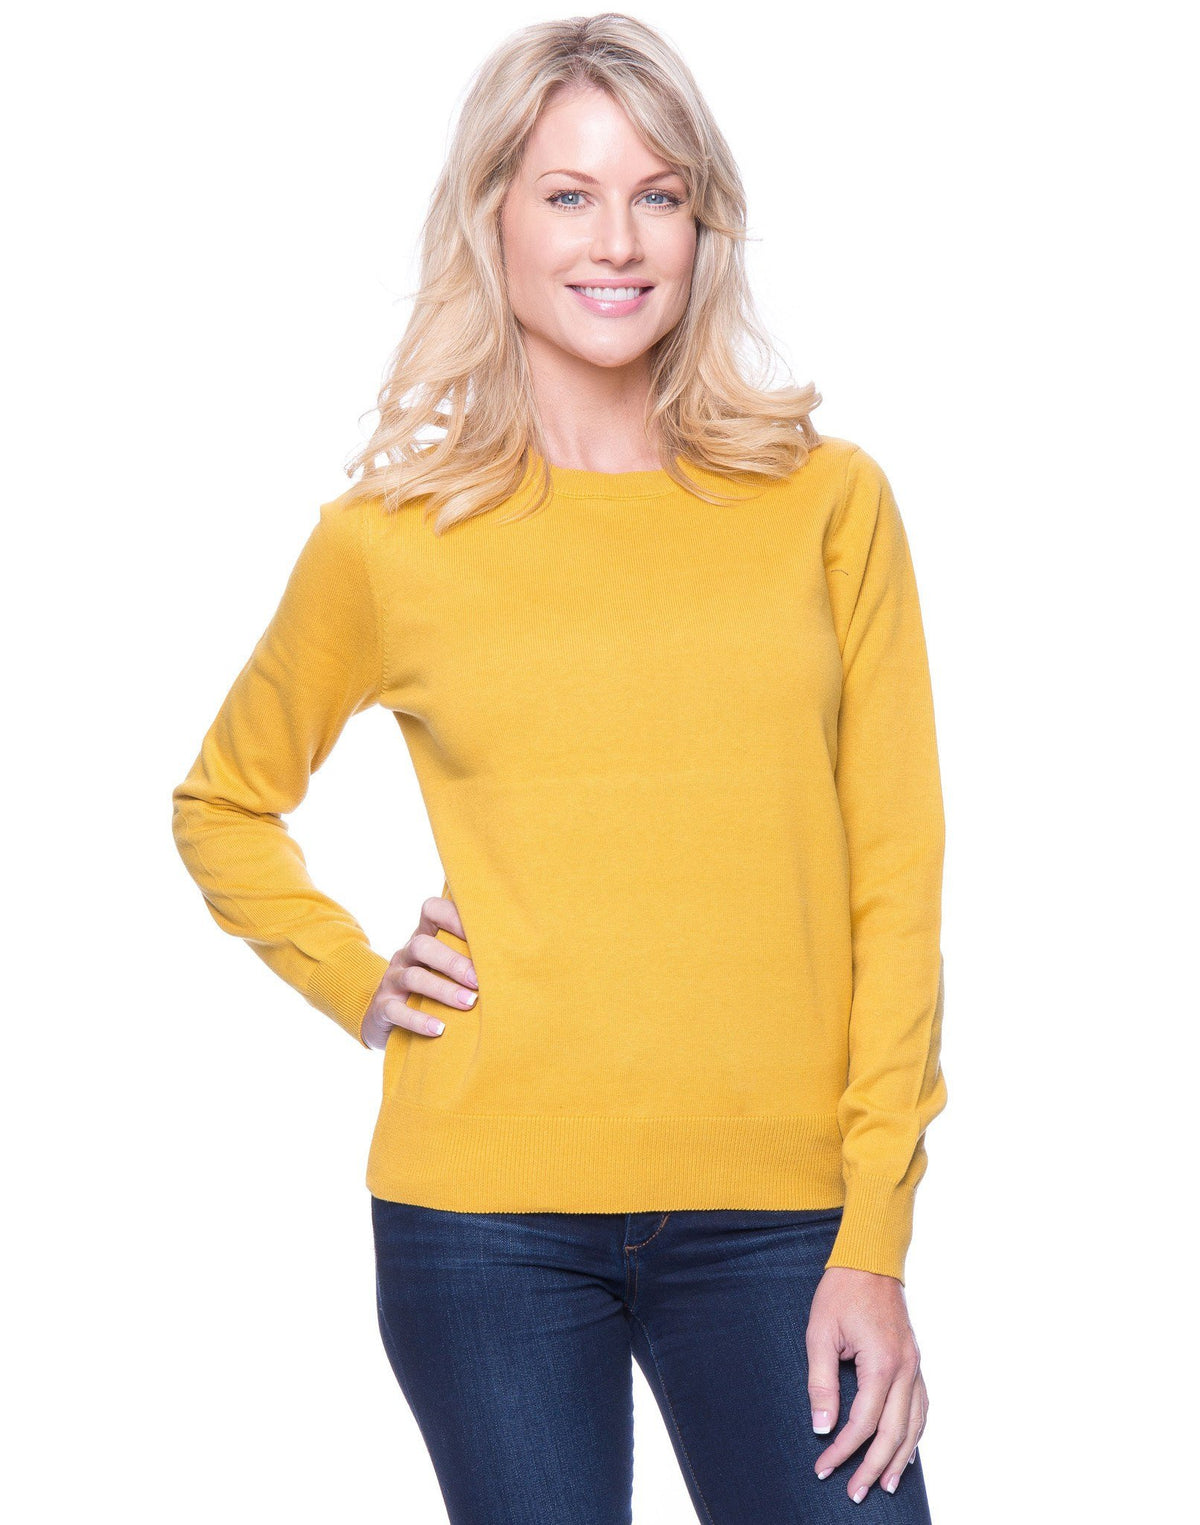 Women's Premium Cotton Crew Neck Sweater - Mustard